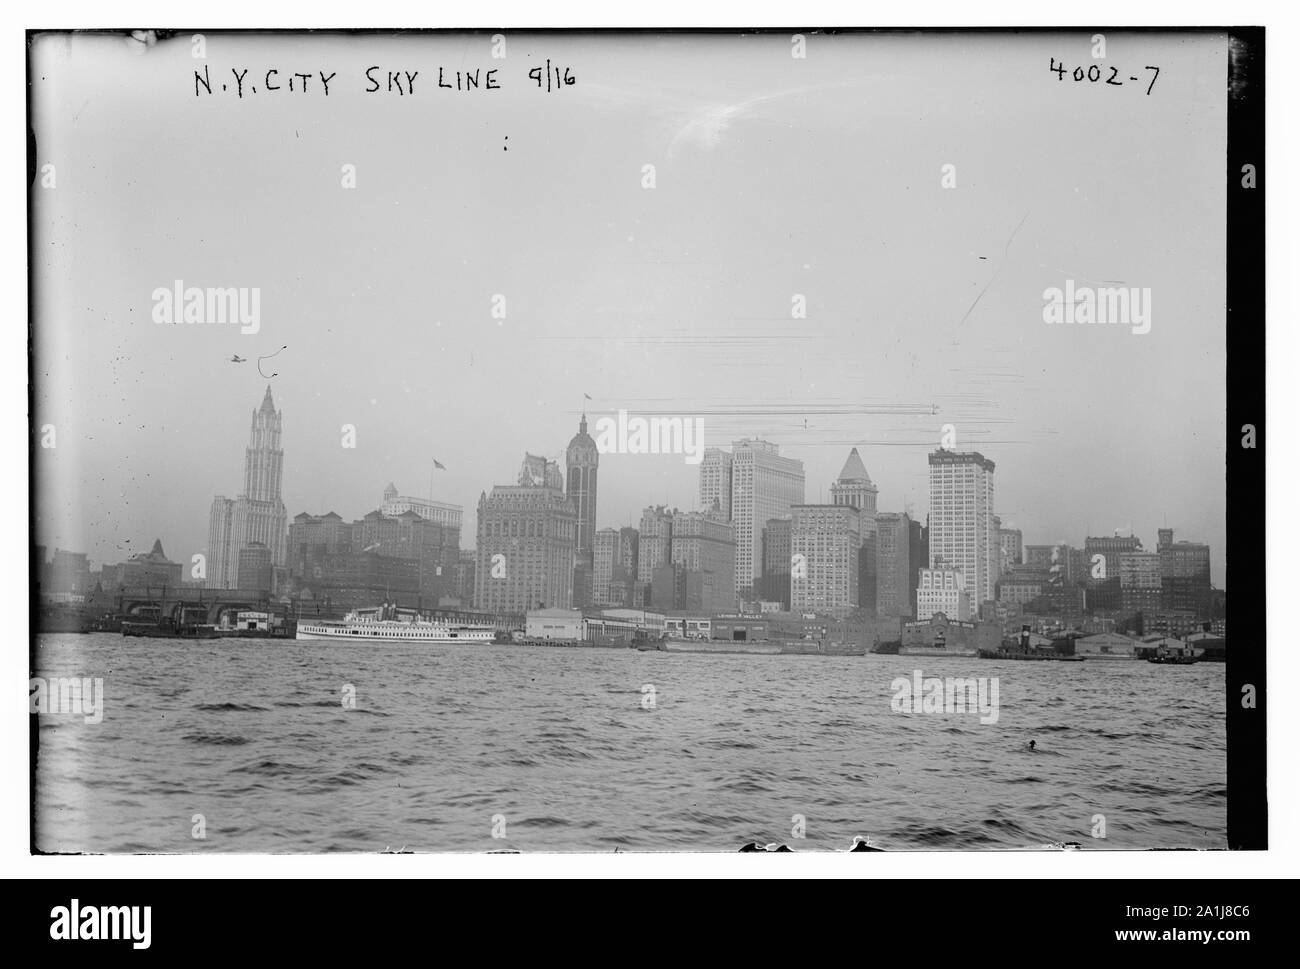 New York City Sky Line, 9/16 Stockfoto